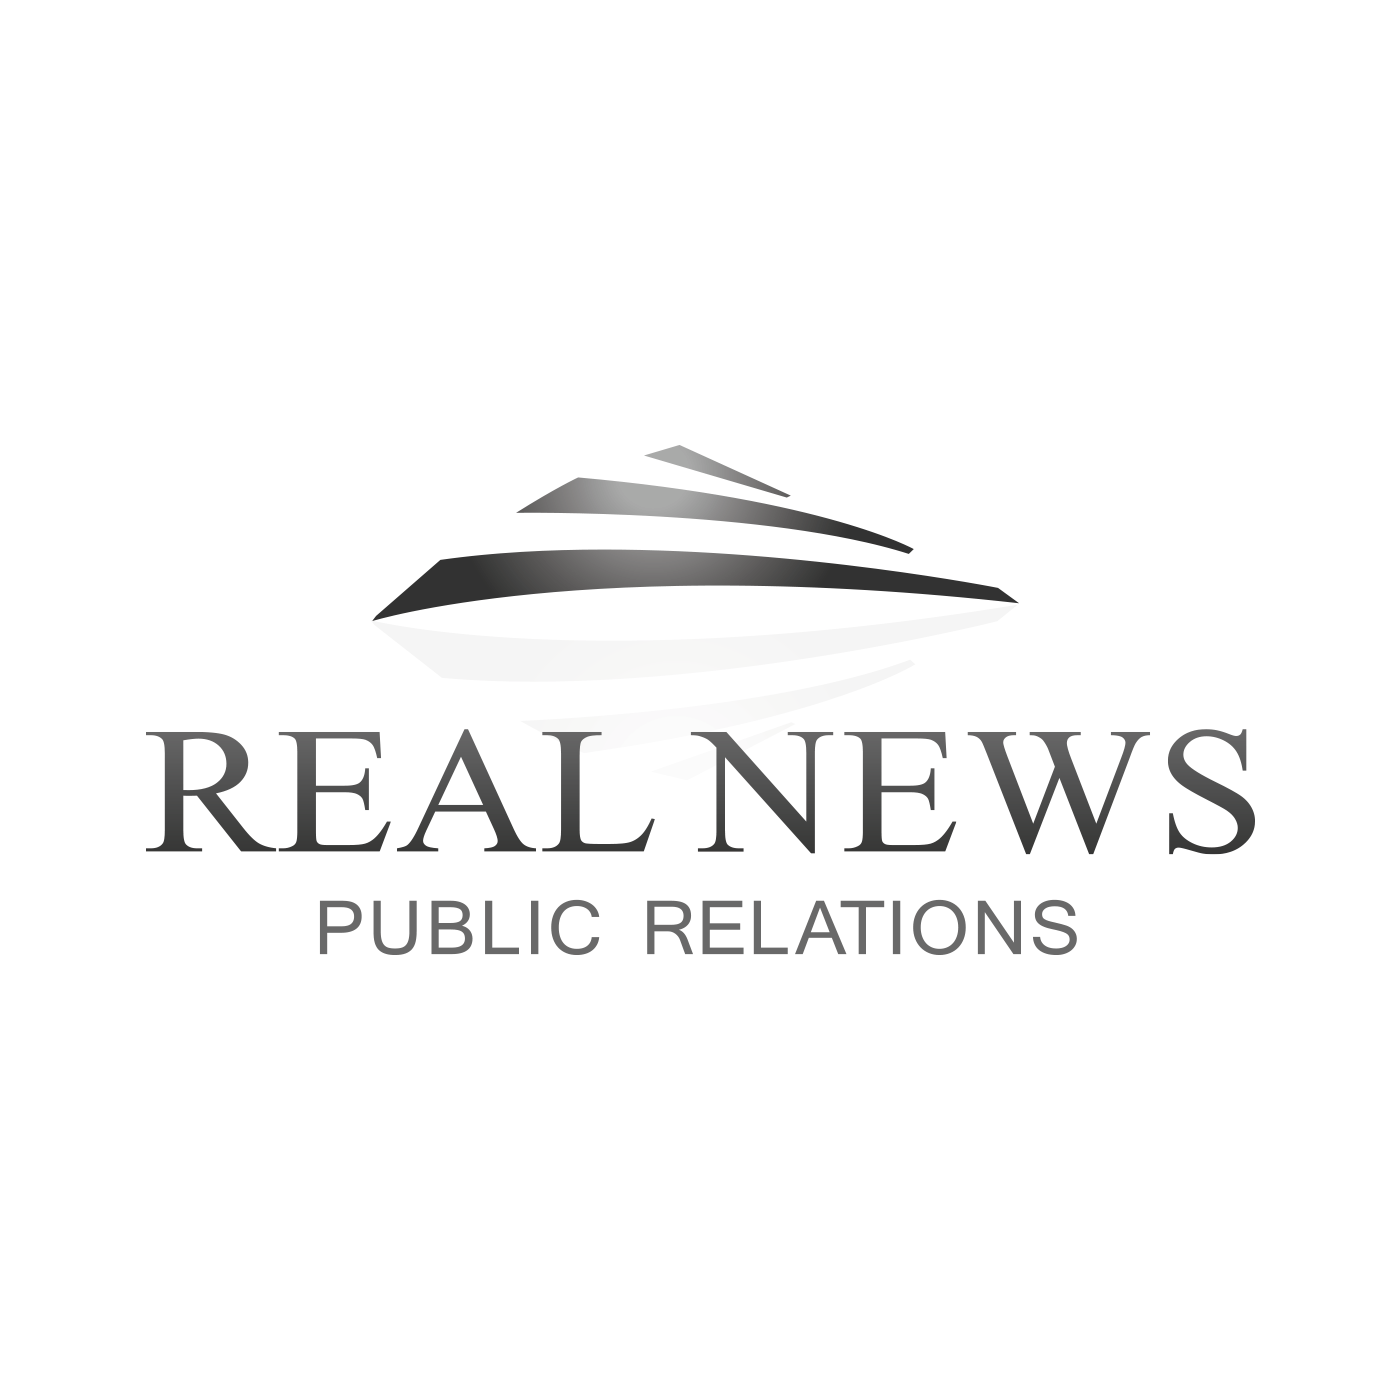 PR Logo - Dallas Public Relations Marketing Firm in TX. Real News PR